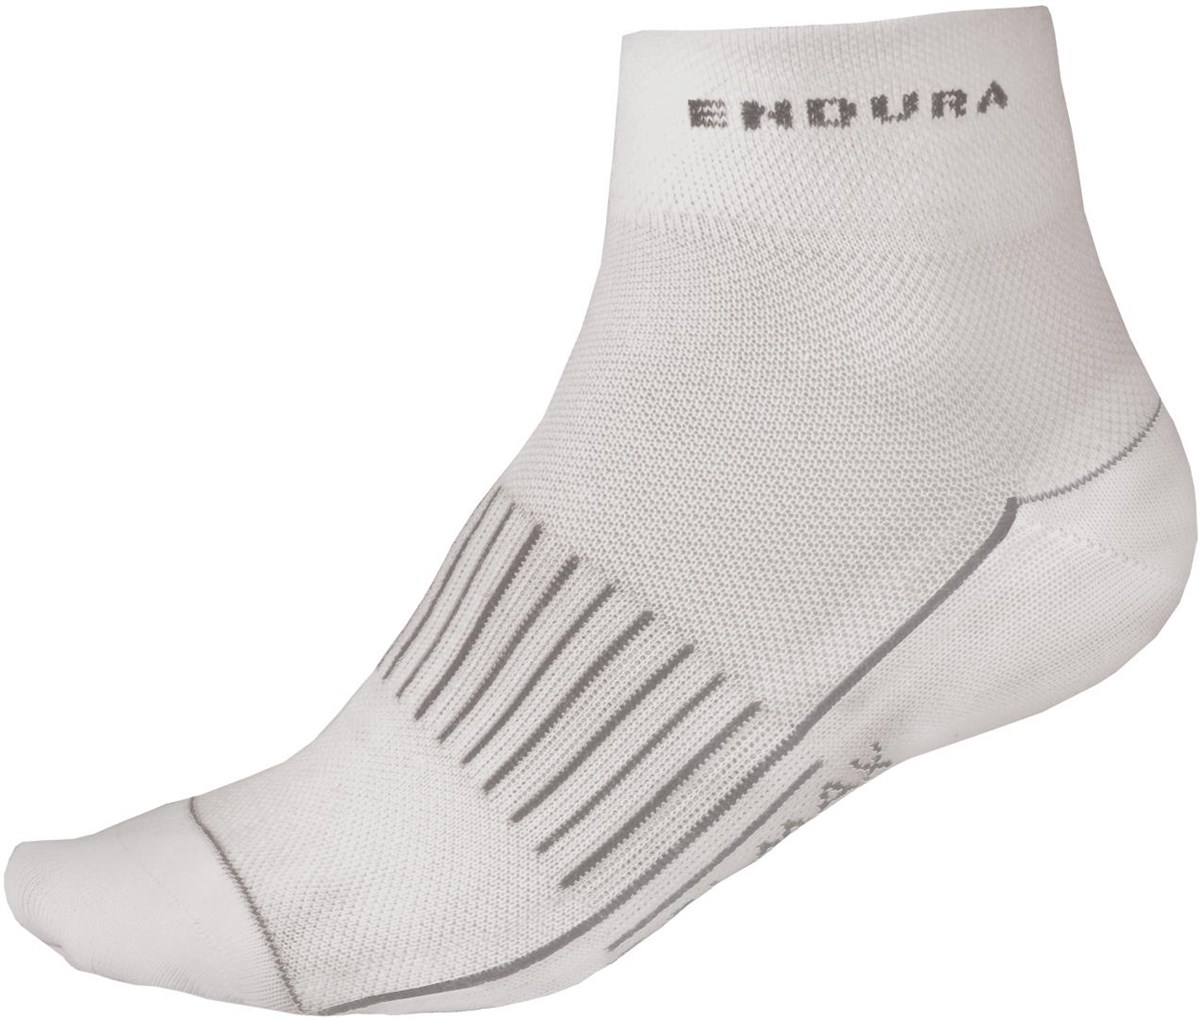 Endura Coolmax Race Womens Cycling Socks - Triple Pack product image